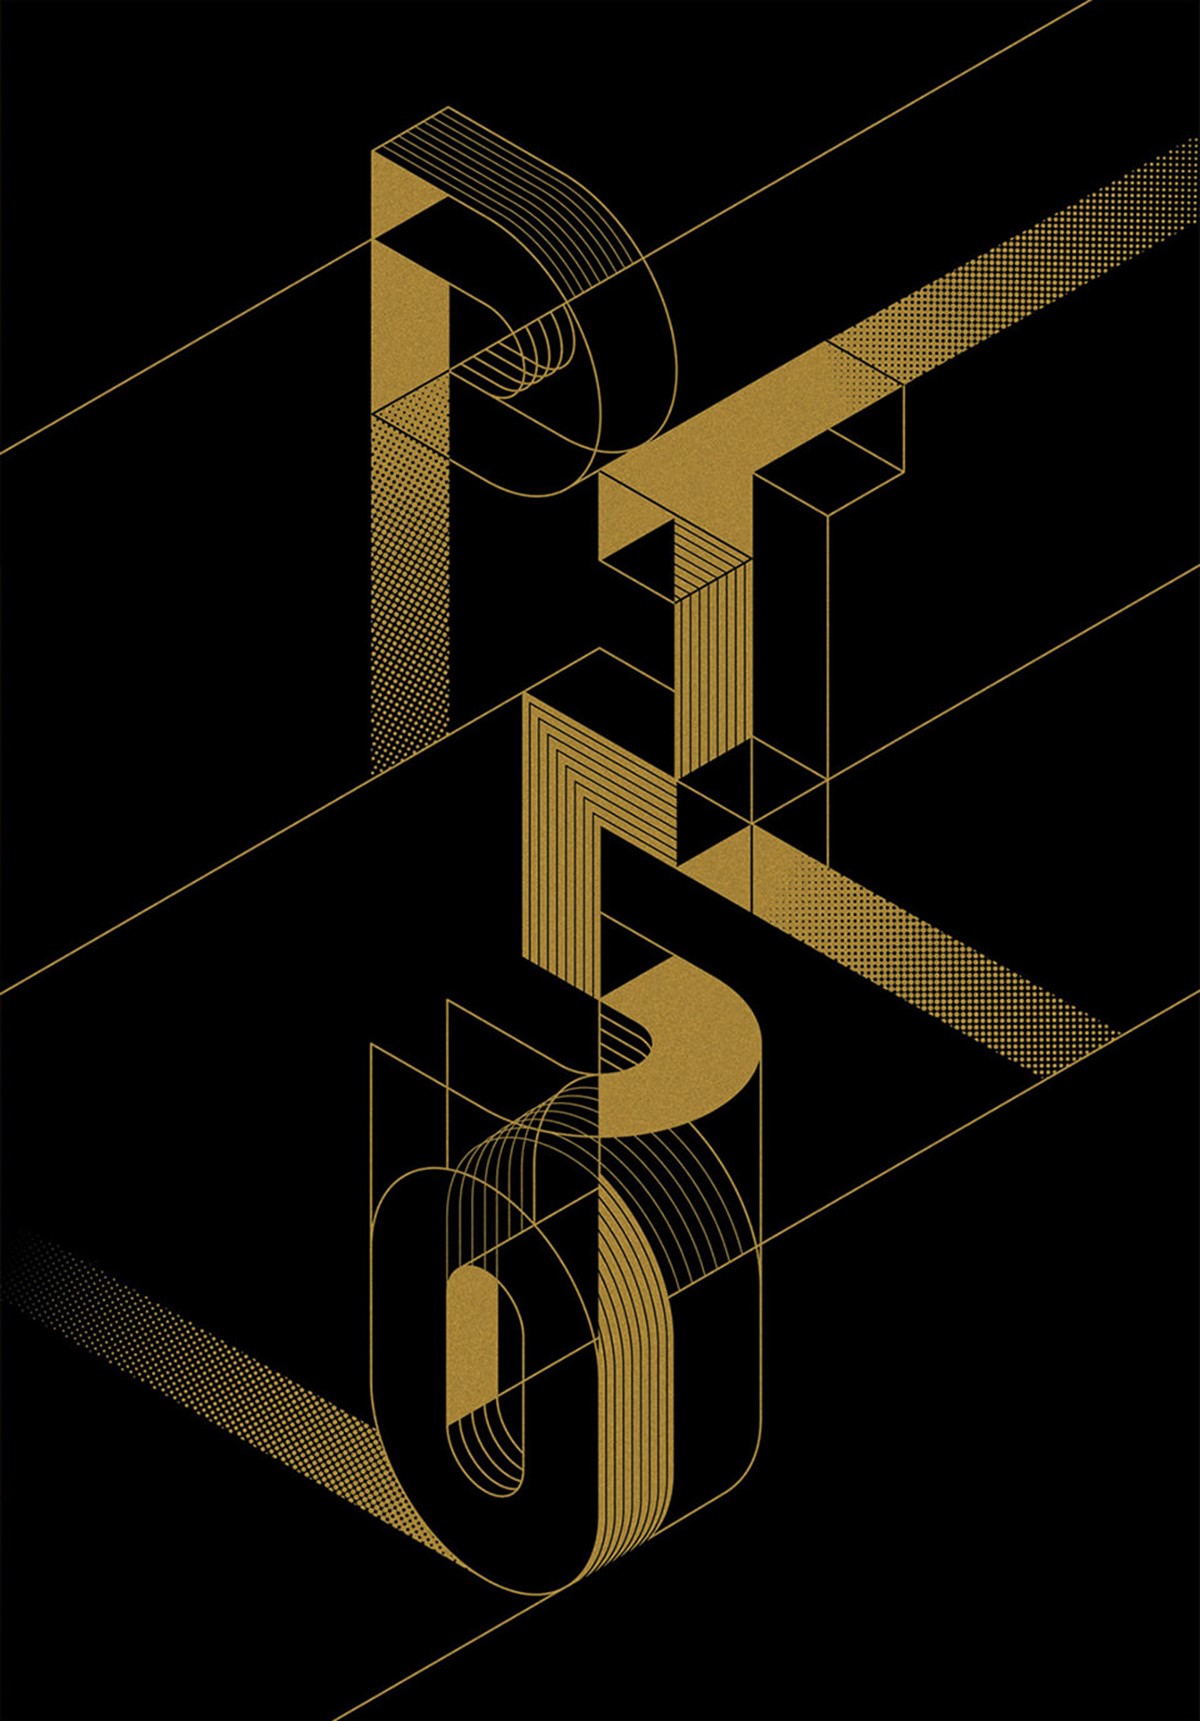 Psychology Today Magazine. Experimental bespoke typography on black. Design by Superfried.